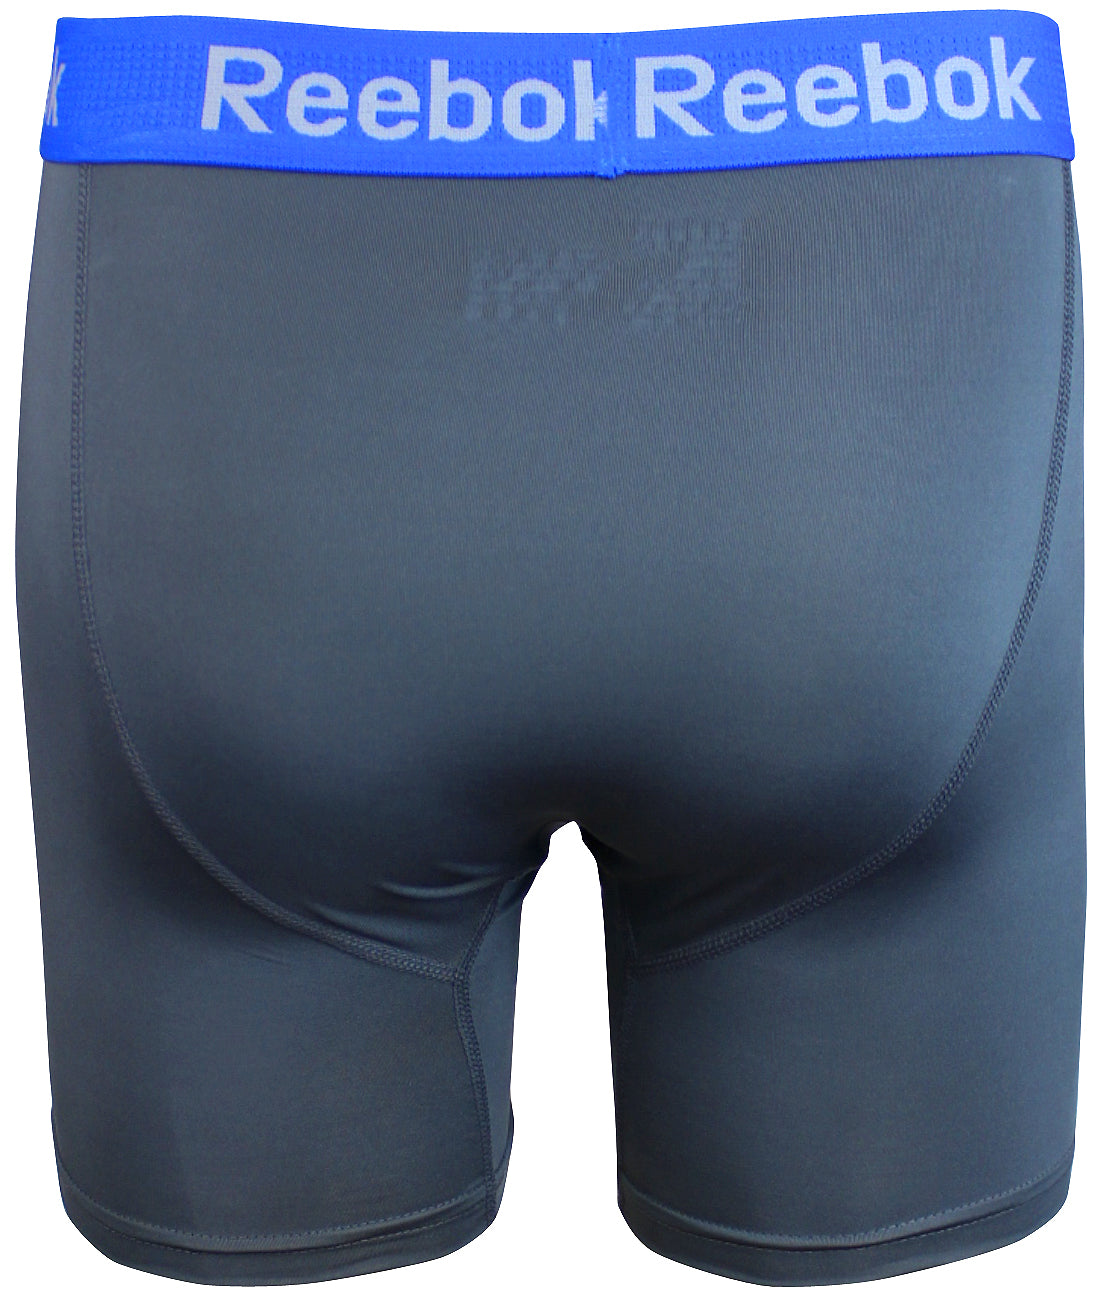 Reebok Mens Performance Training Boxer Briefs Grey Blue size SMALL